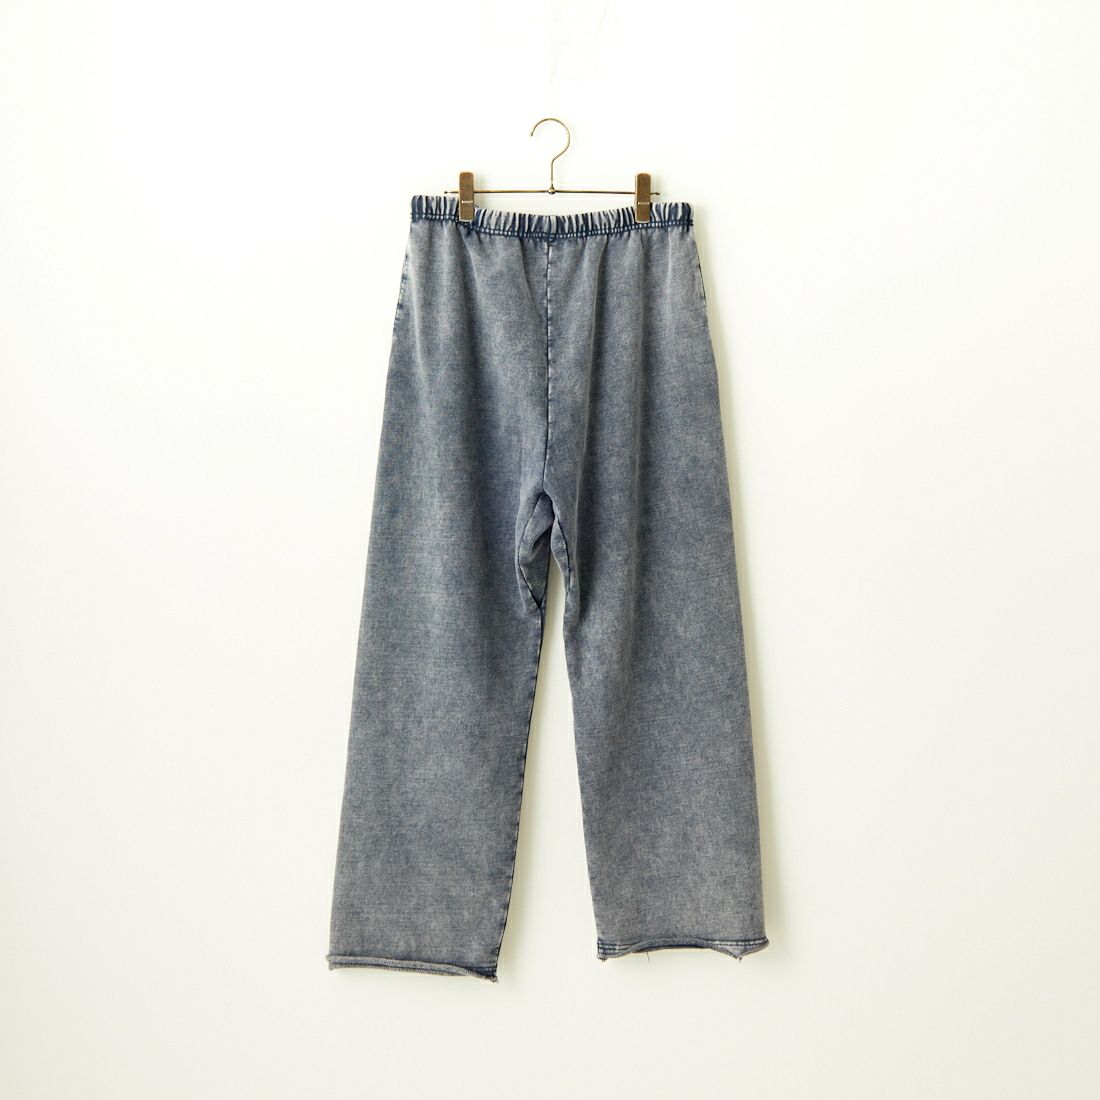 Jeans Factory Clothes [ジーンズファクトリークローズ] アシッド加工スウェットパンツ [2421-409IN] NAVY